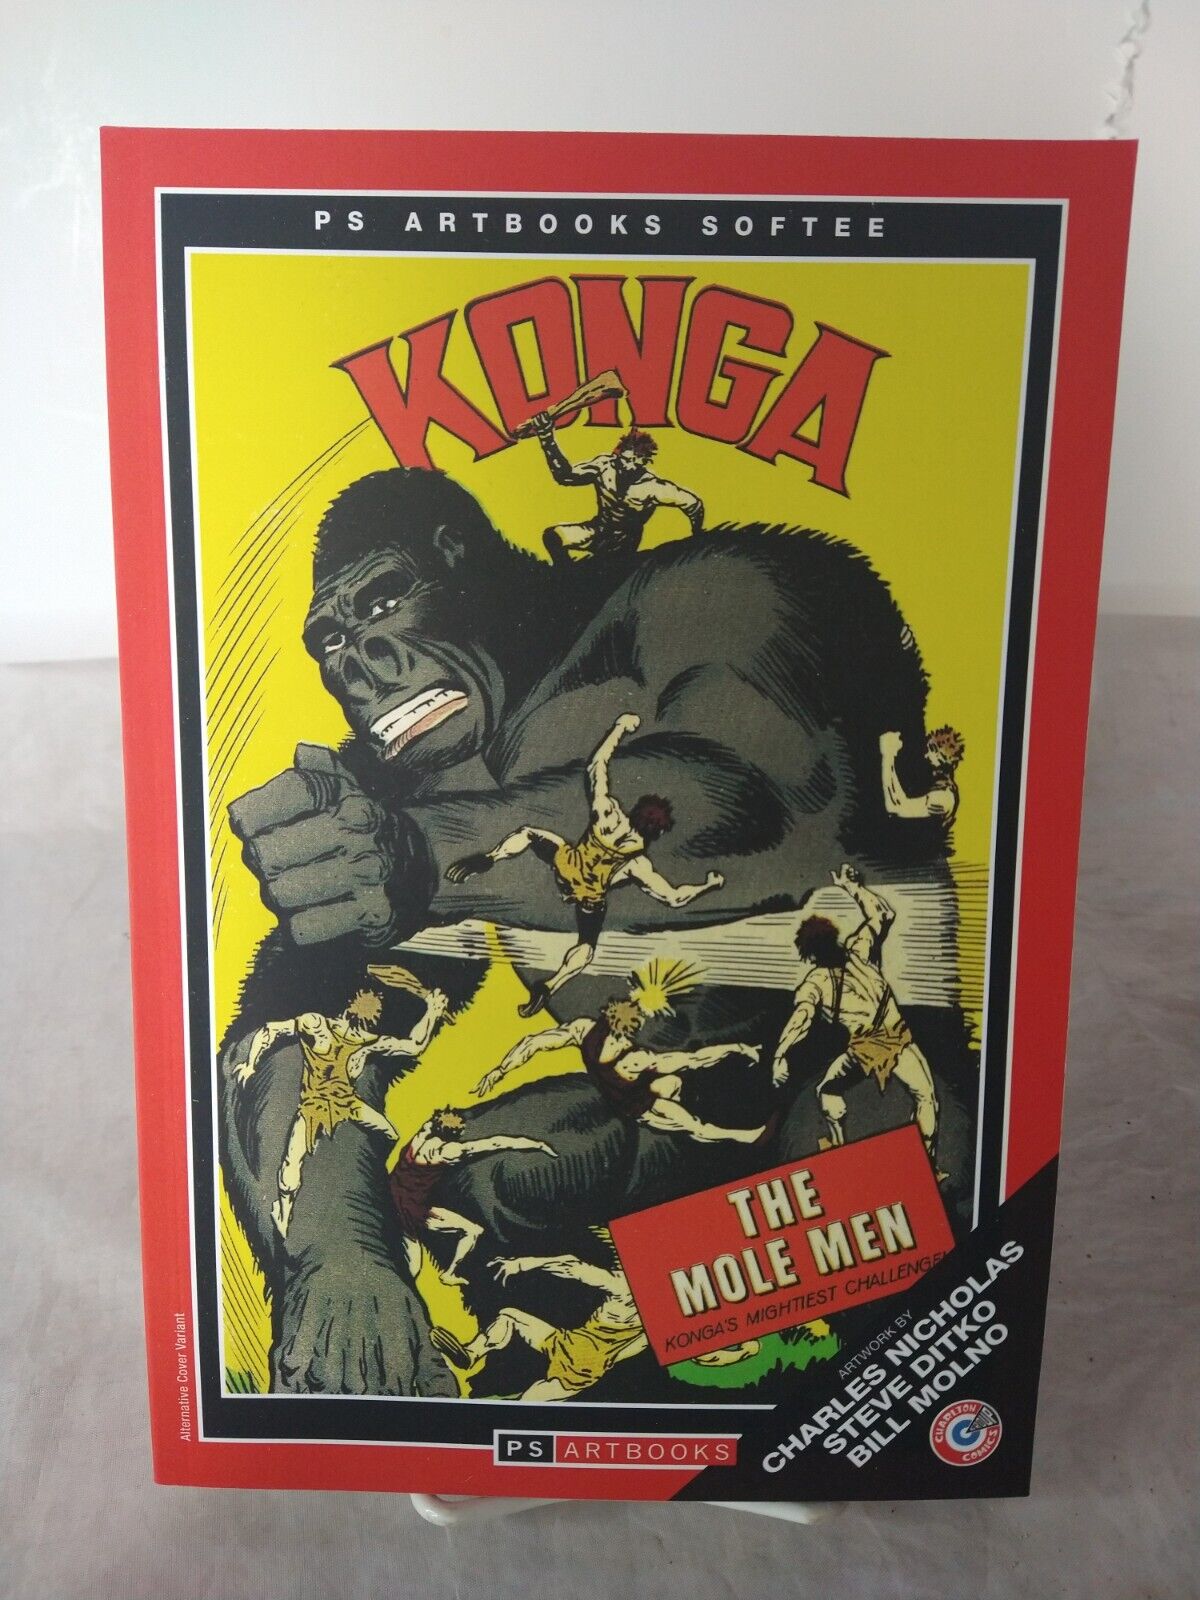 PS Artbooks Softee: Konga Volume 2 Trade Paperback New